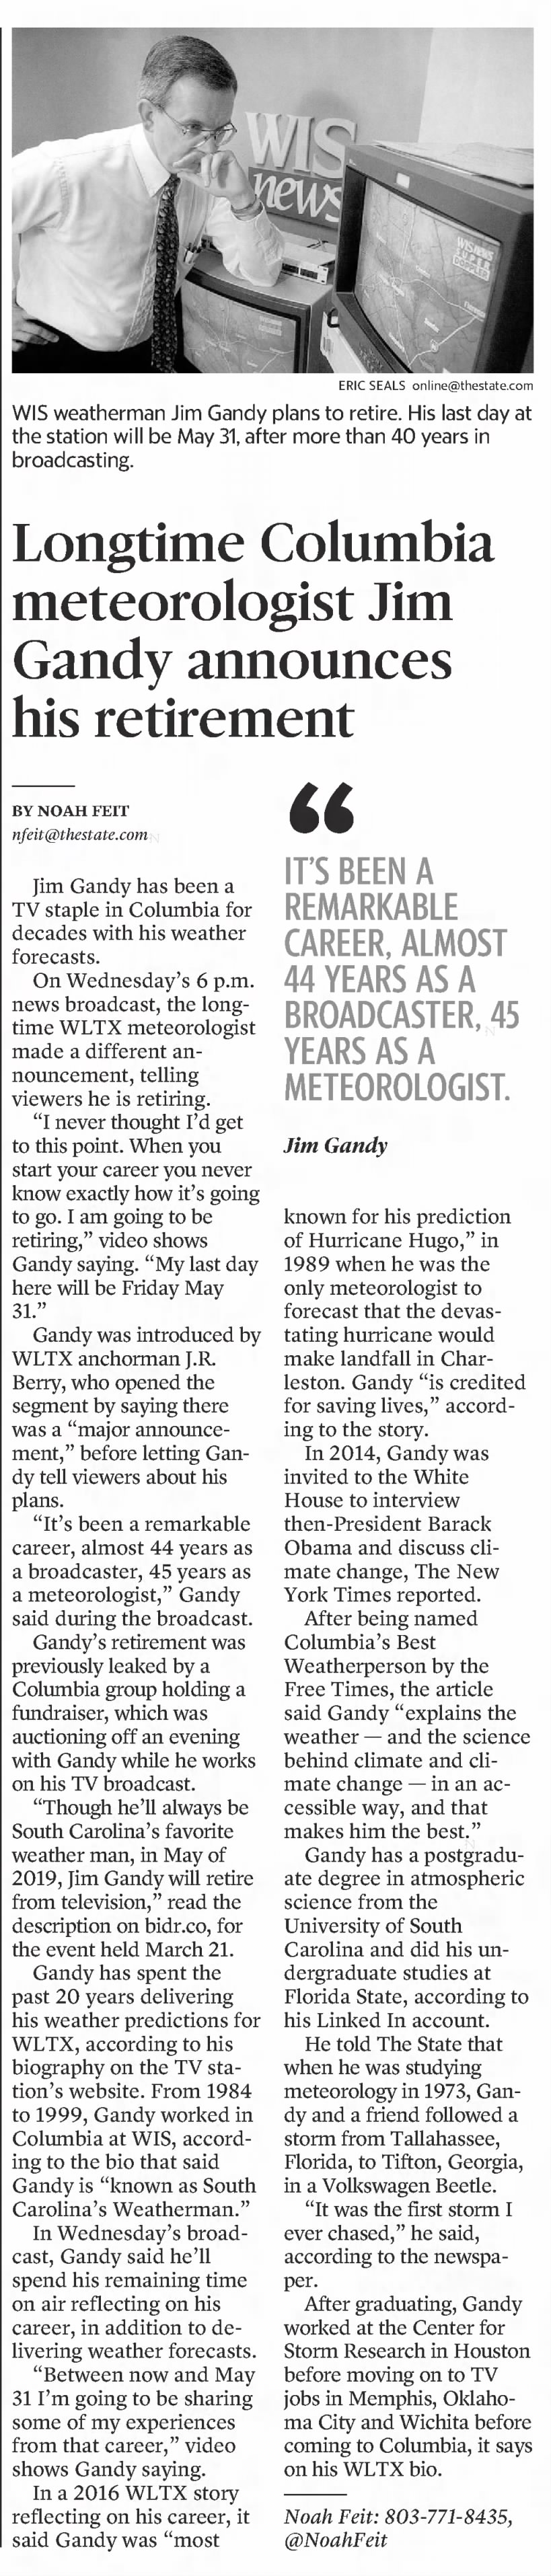 Longtime Columbia meteorologist Jim Gandy announces his retirement